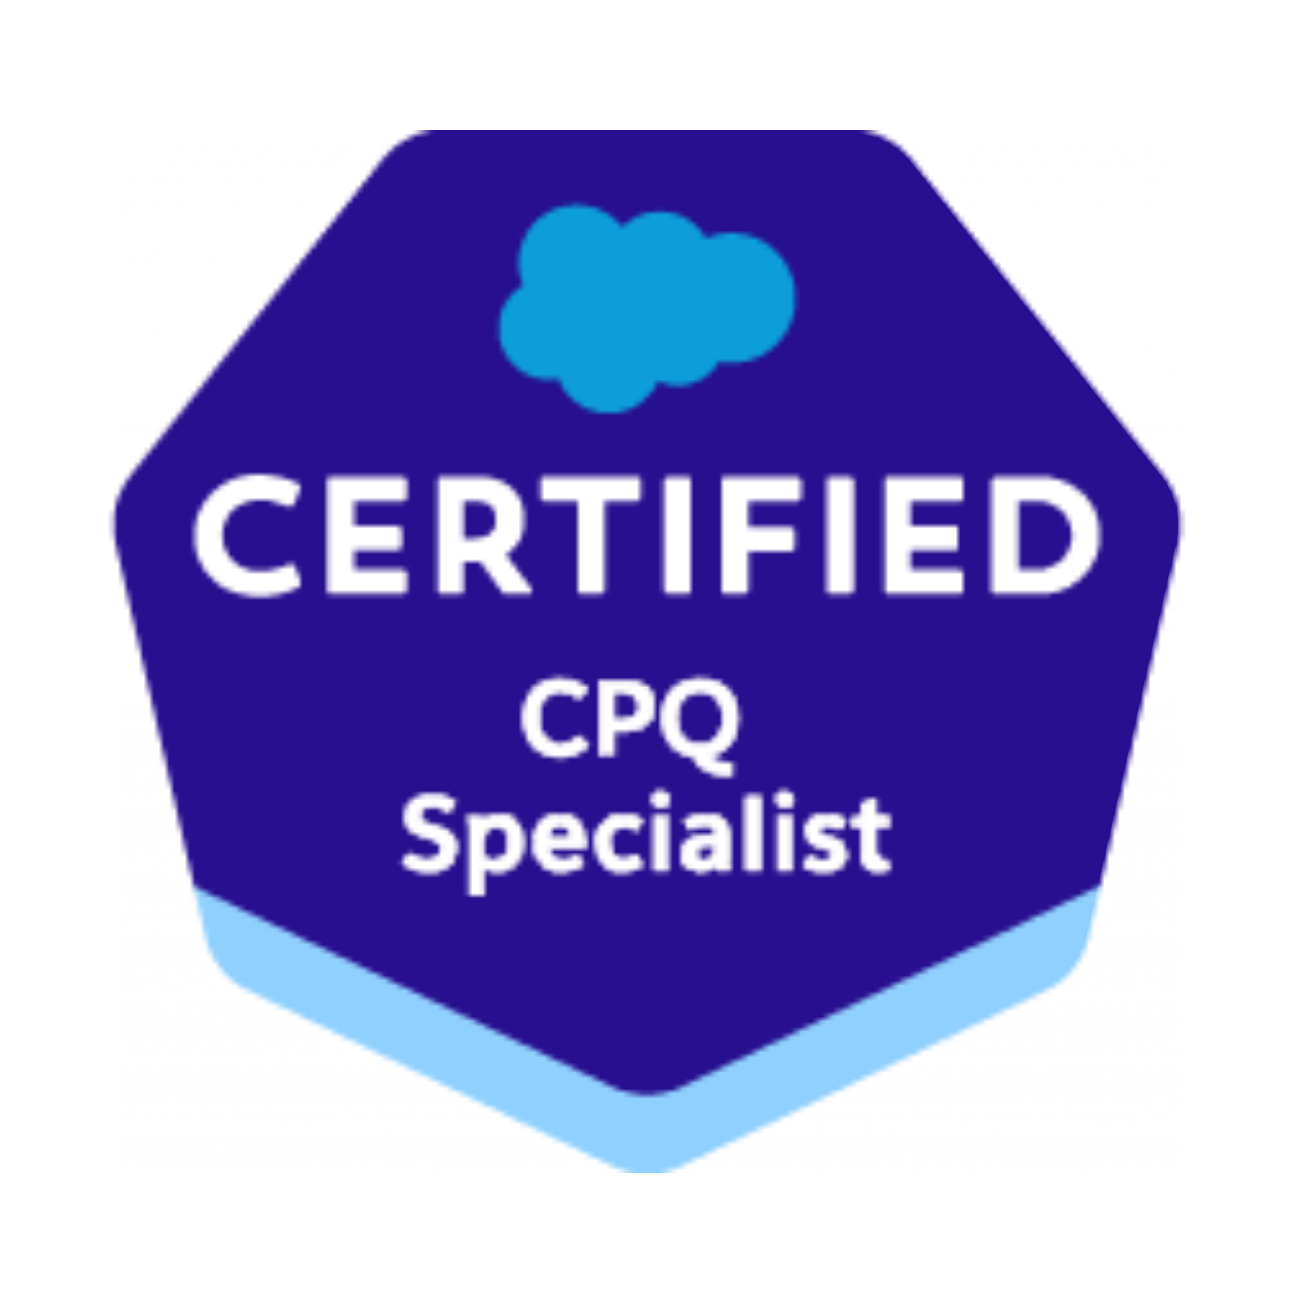 Certified CPQ specialist badge